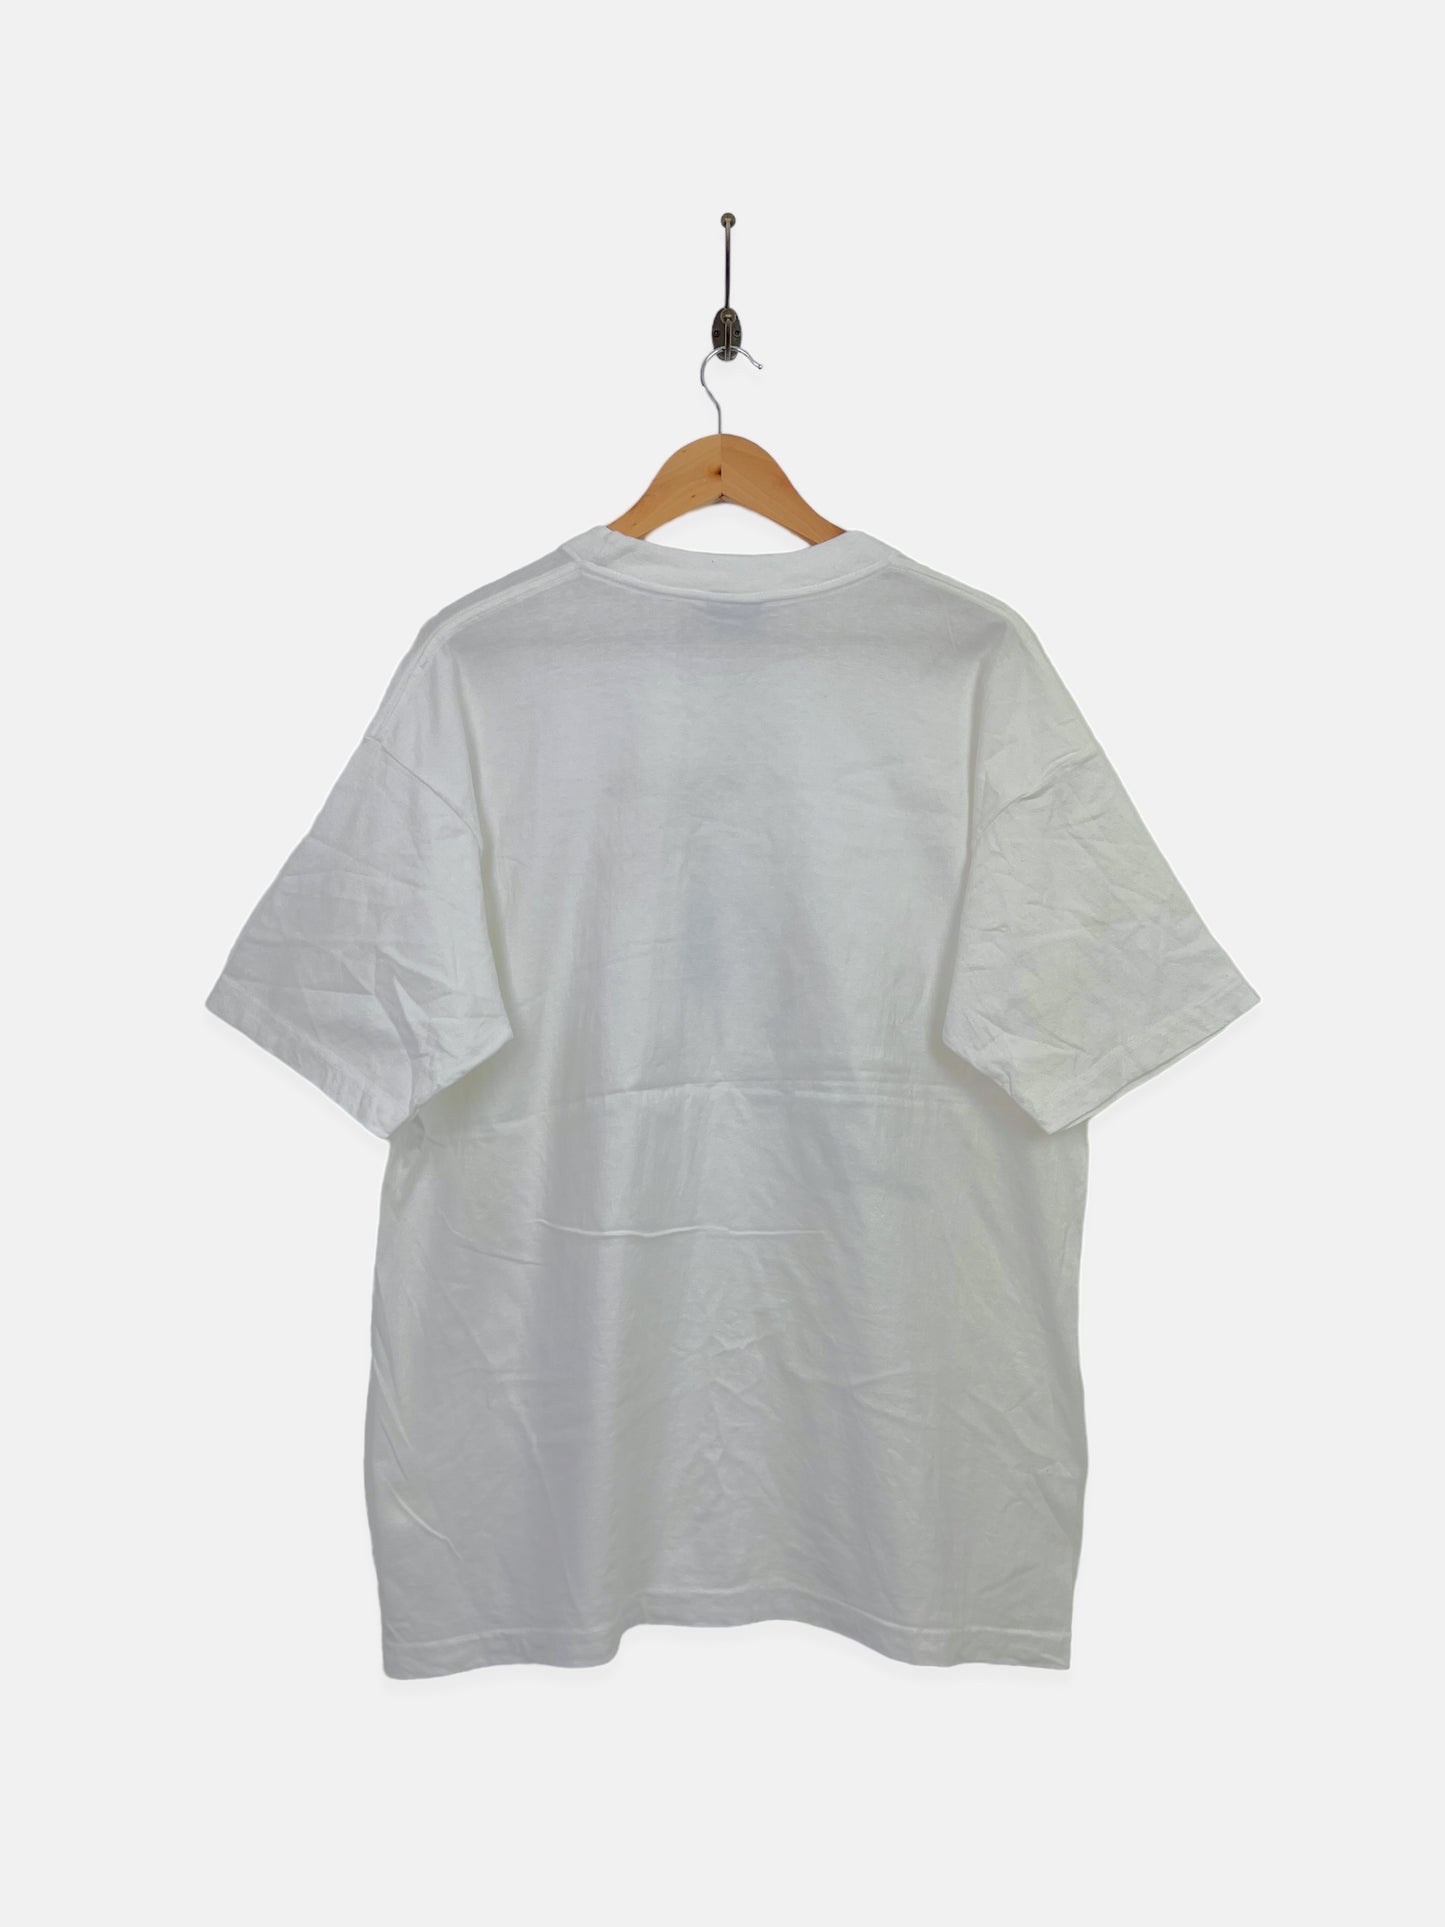 90's Wayside Vendor Barbados Vintage T-Shirt Size XL